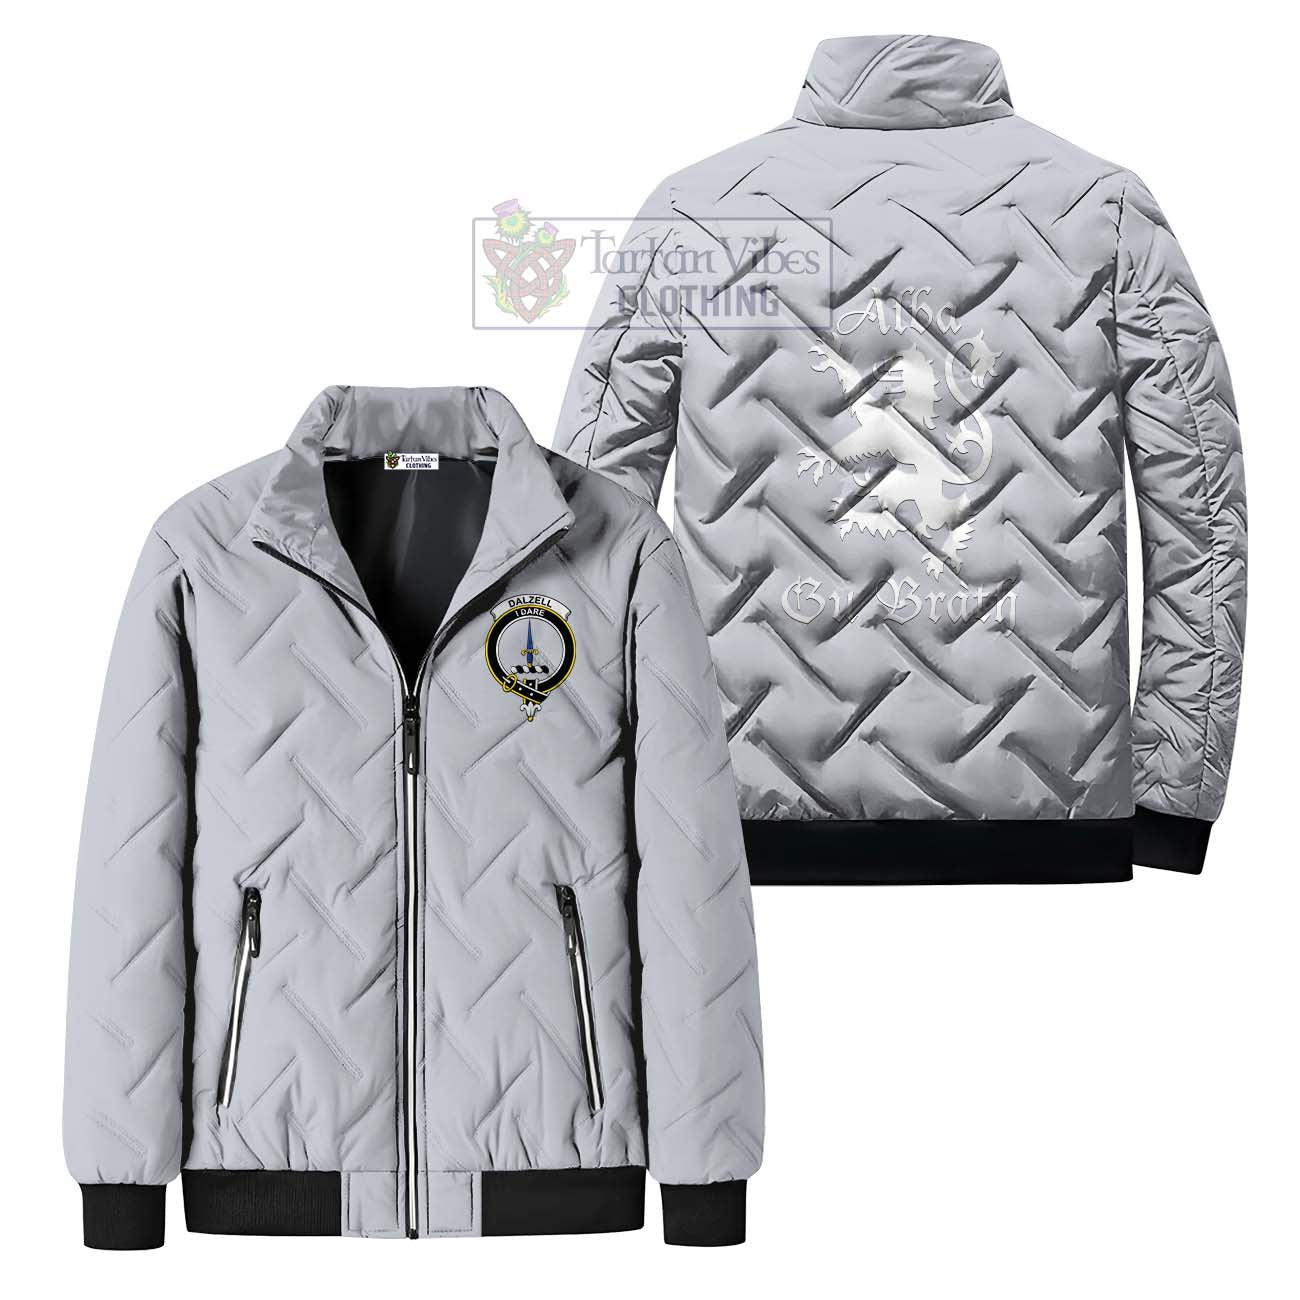 Tartan Vibes Clothing Dalzell Family Crest Padded Cotton Jacket Lion Rampant Alba Gu Brath Style